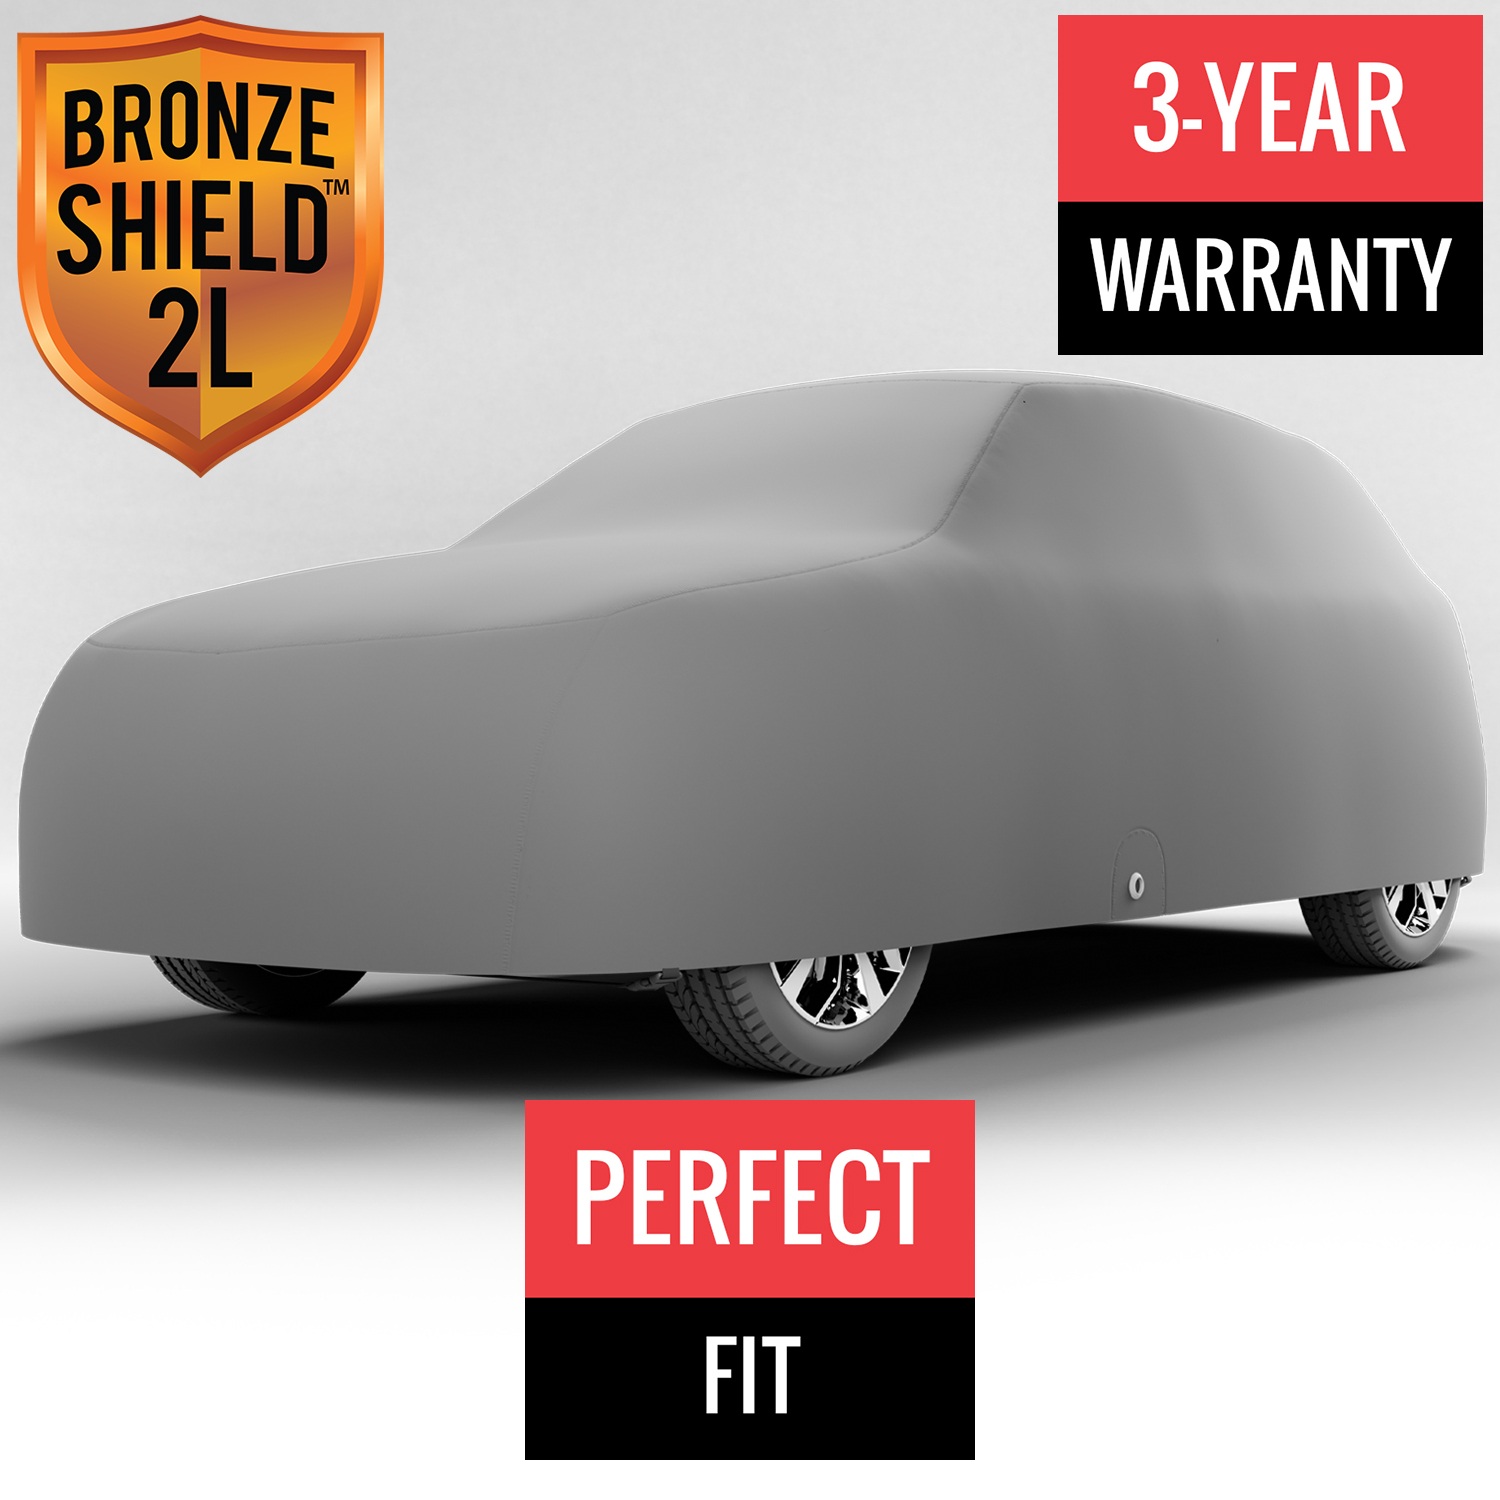 Bronze Shield 2L - Car Cover for Scion xB 2008 Wagon 4-Door